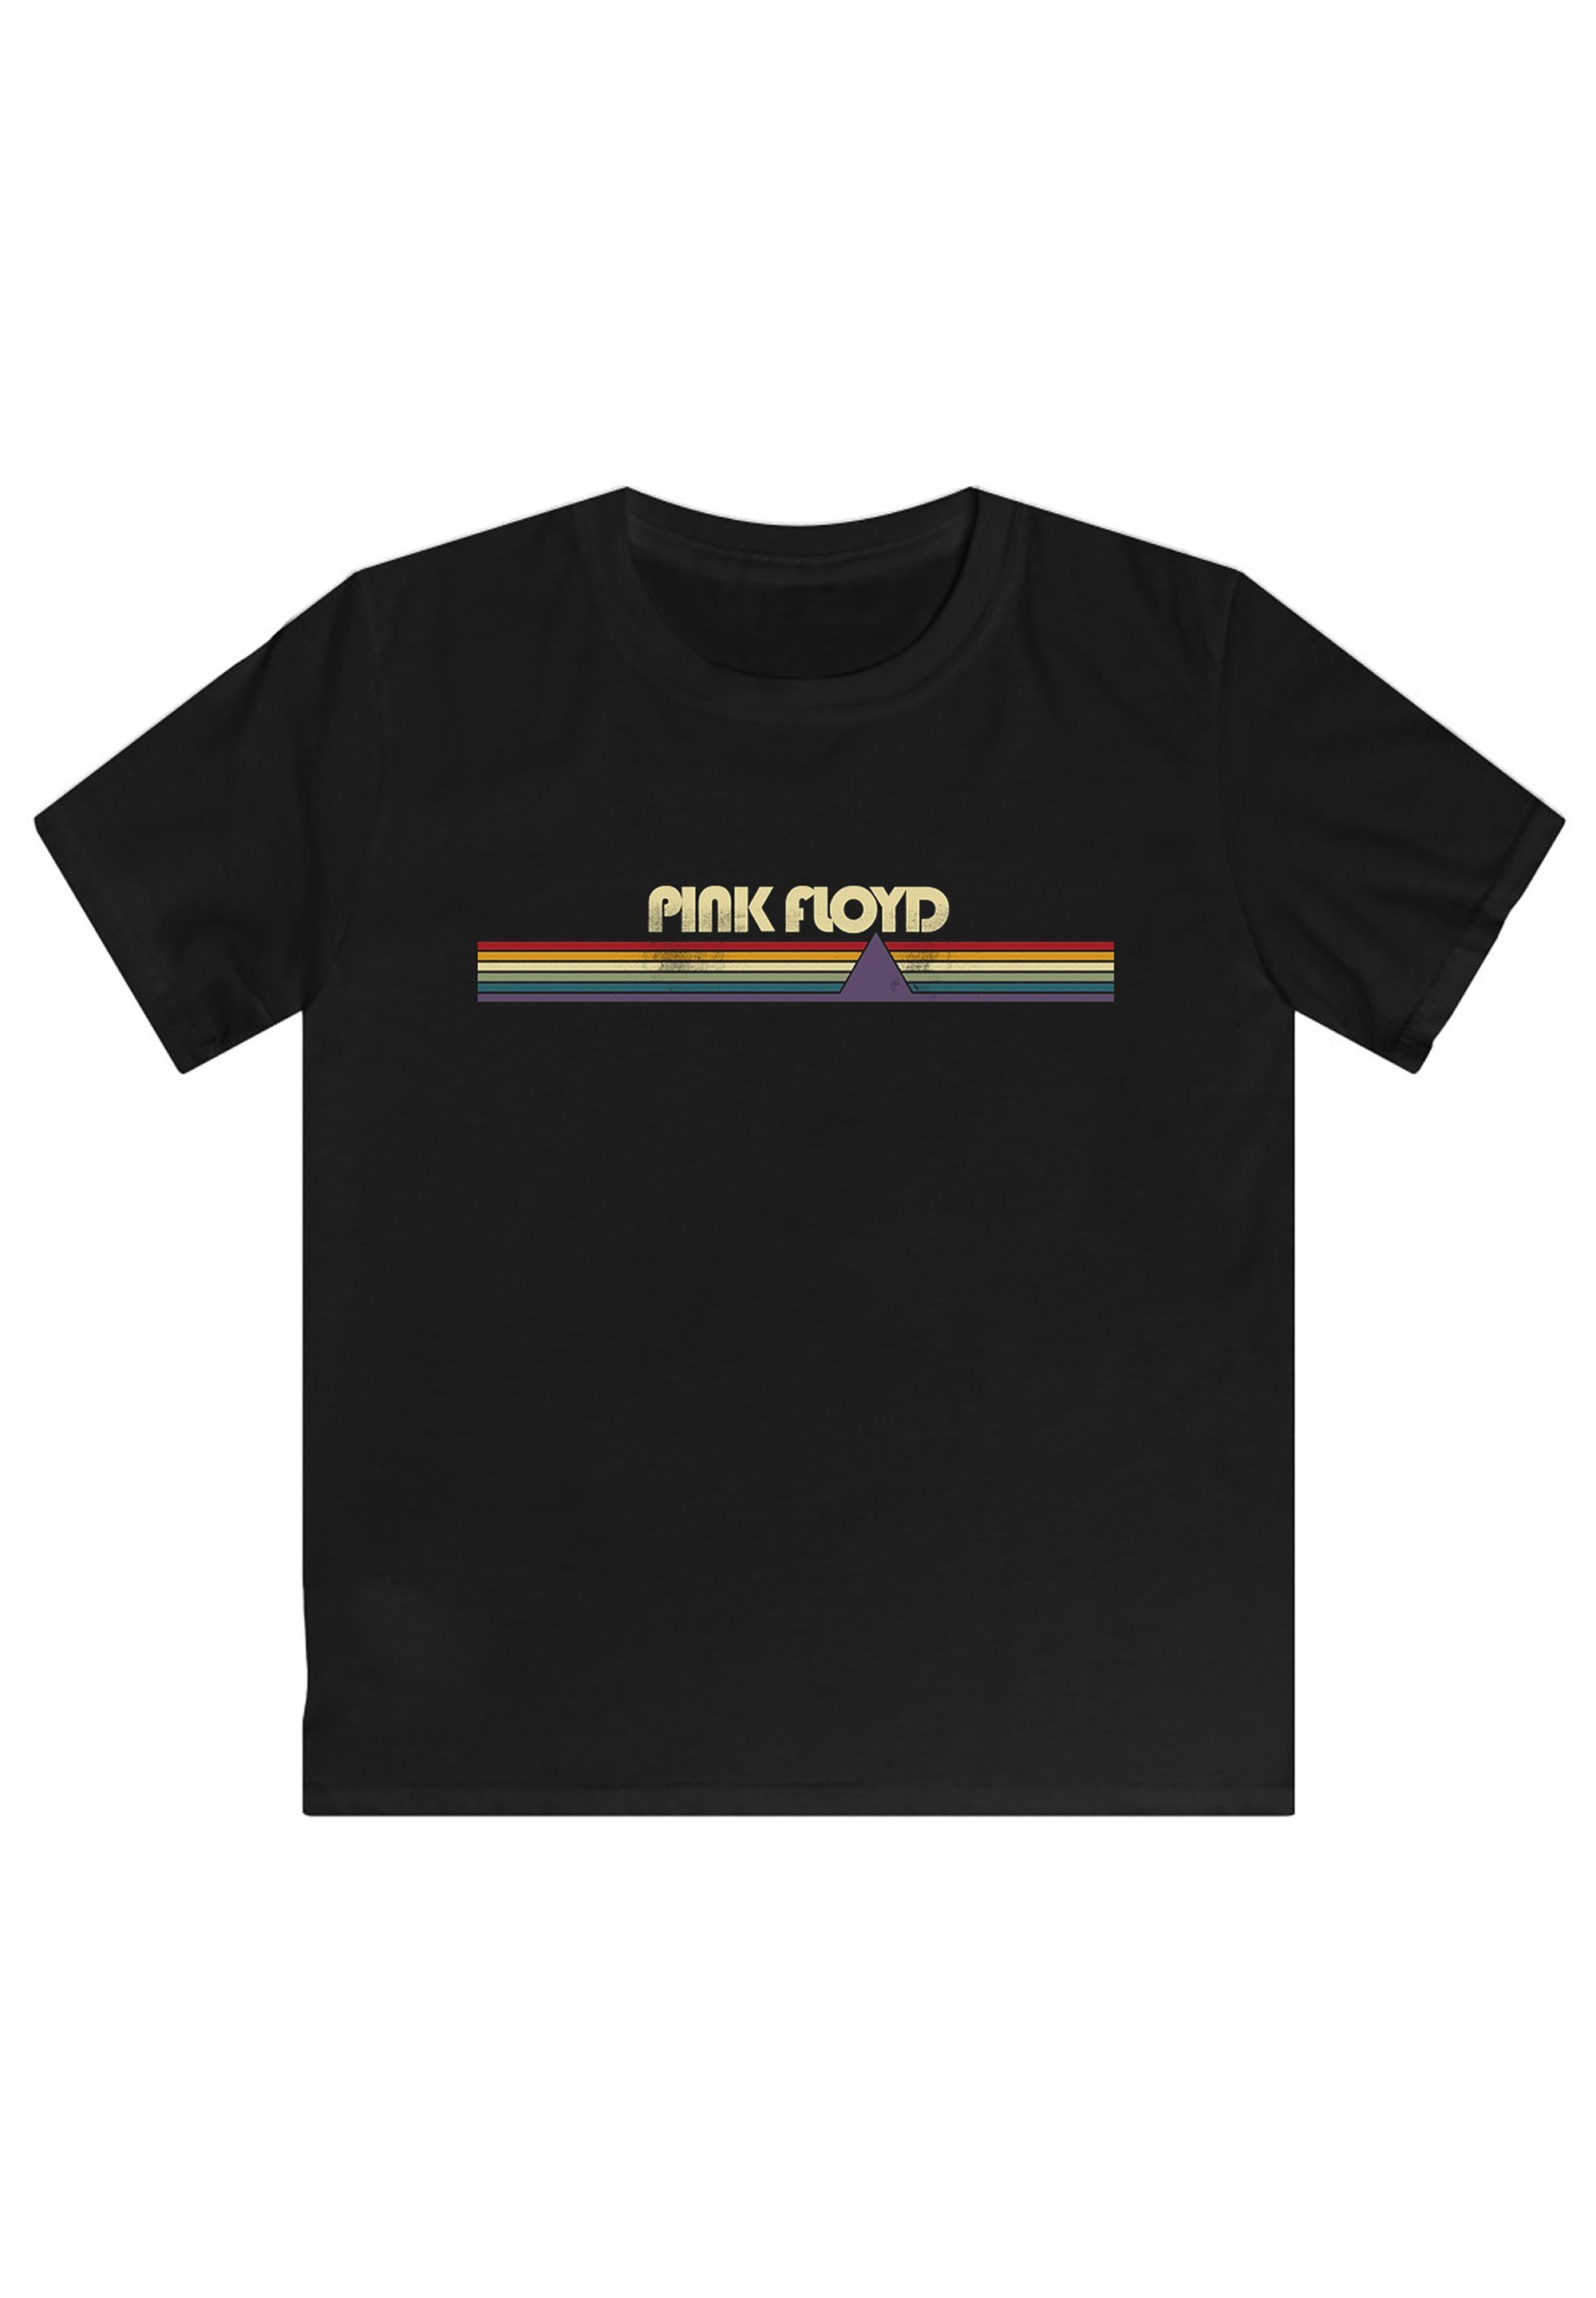 F4NT4STIC T-Shirt Pink Floyd Prism Stripes. Retro Print